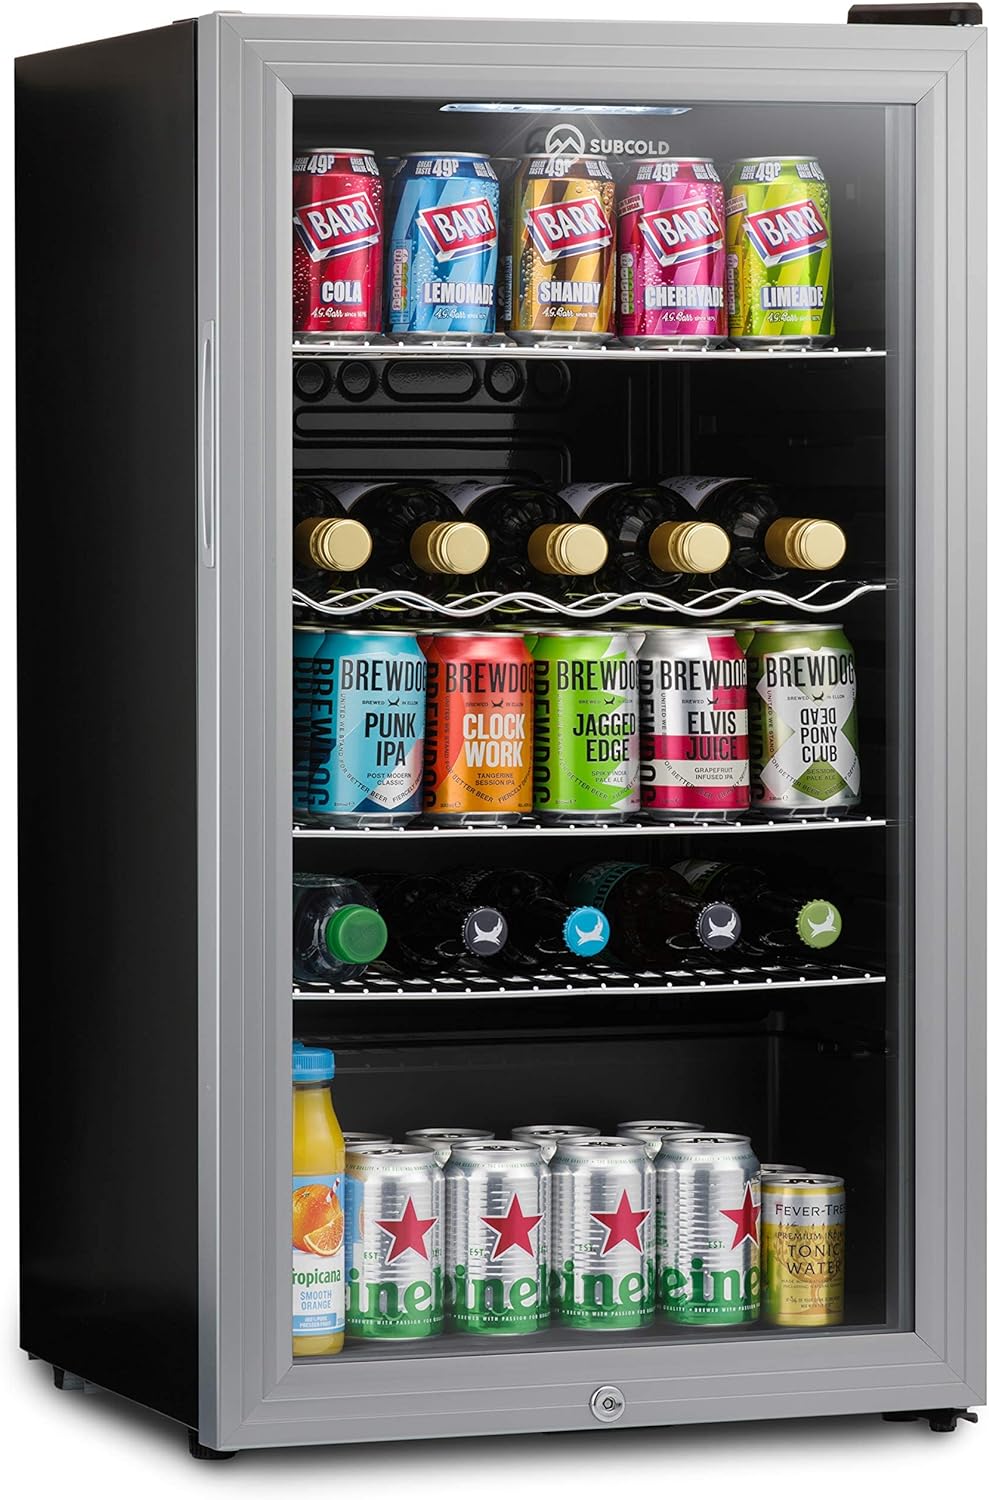 Subcold Super85 LED - Under - Counter Fridge | 85L Beer, Wine & Drinks Fridge | LED Light + Lock and Key | Energy Efficient (Black, 85L)… - Amazing Gadgets Outlet